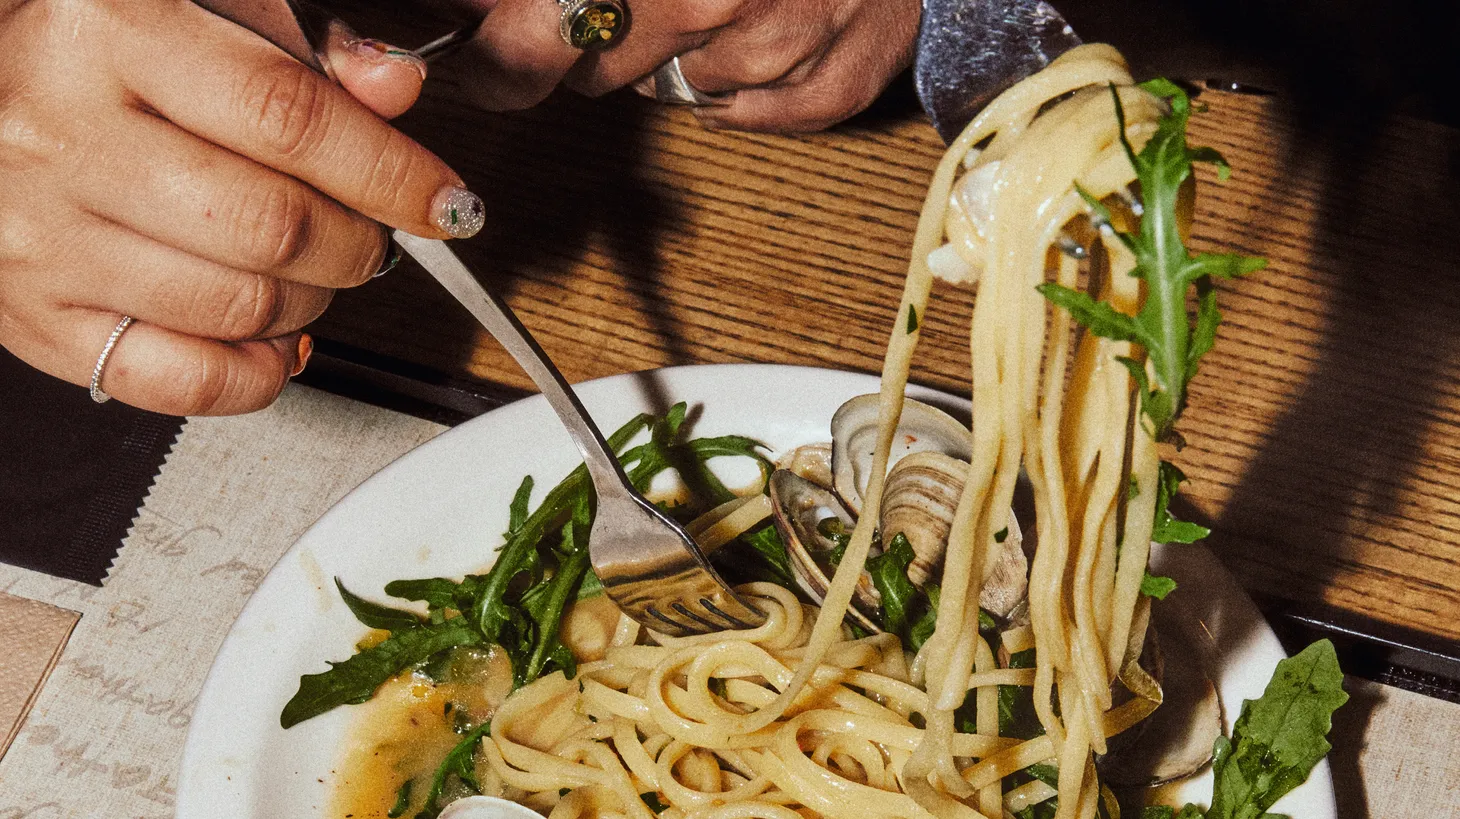 Korea's exploding interest in Italian cuisine inspired this spaghetti vongole recipe.